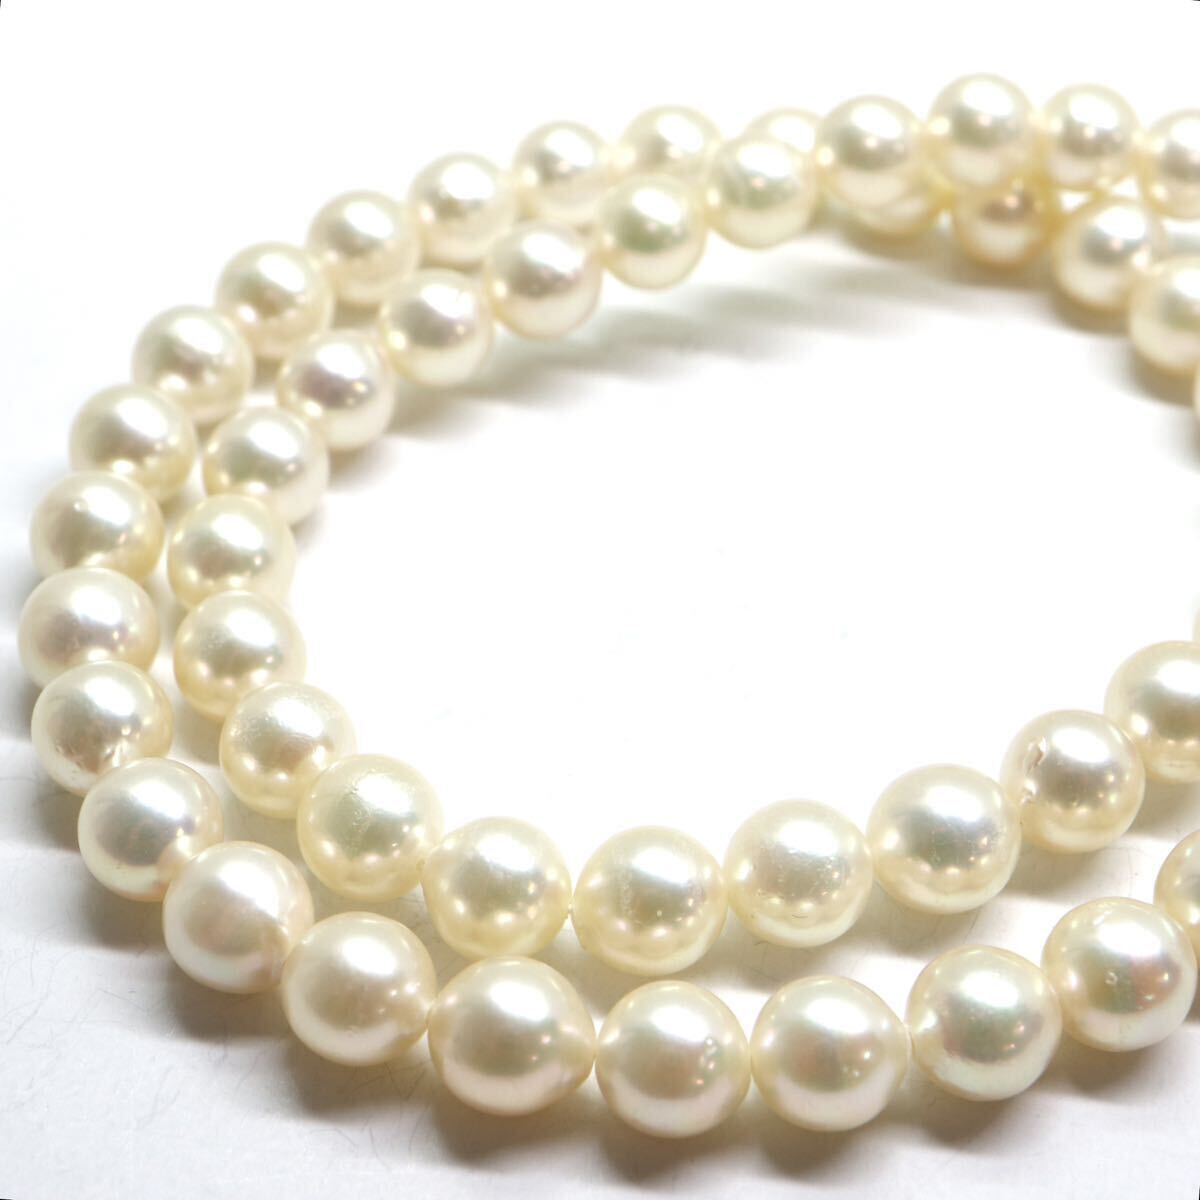 TASAKI(田崎真珠)良質!!《アコヤ本真珠ネックレス》A 約7.0-7.5mm珠 33.8g 約42.5cm pearl necklace ジュエリー jewelry EB5/EE5の画像4